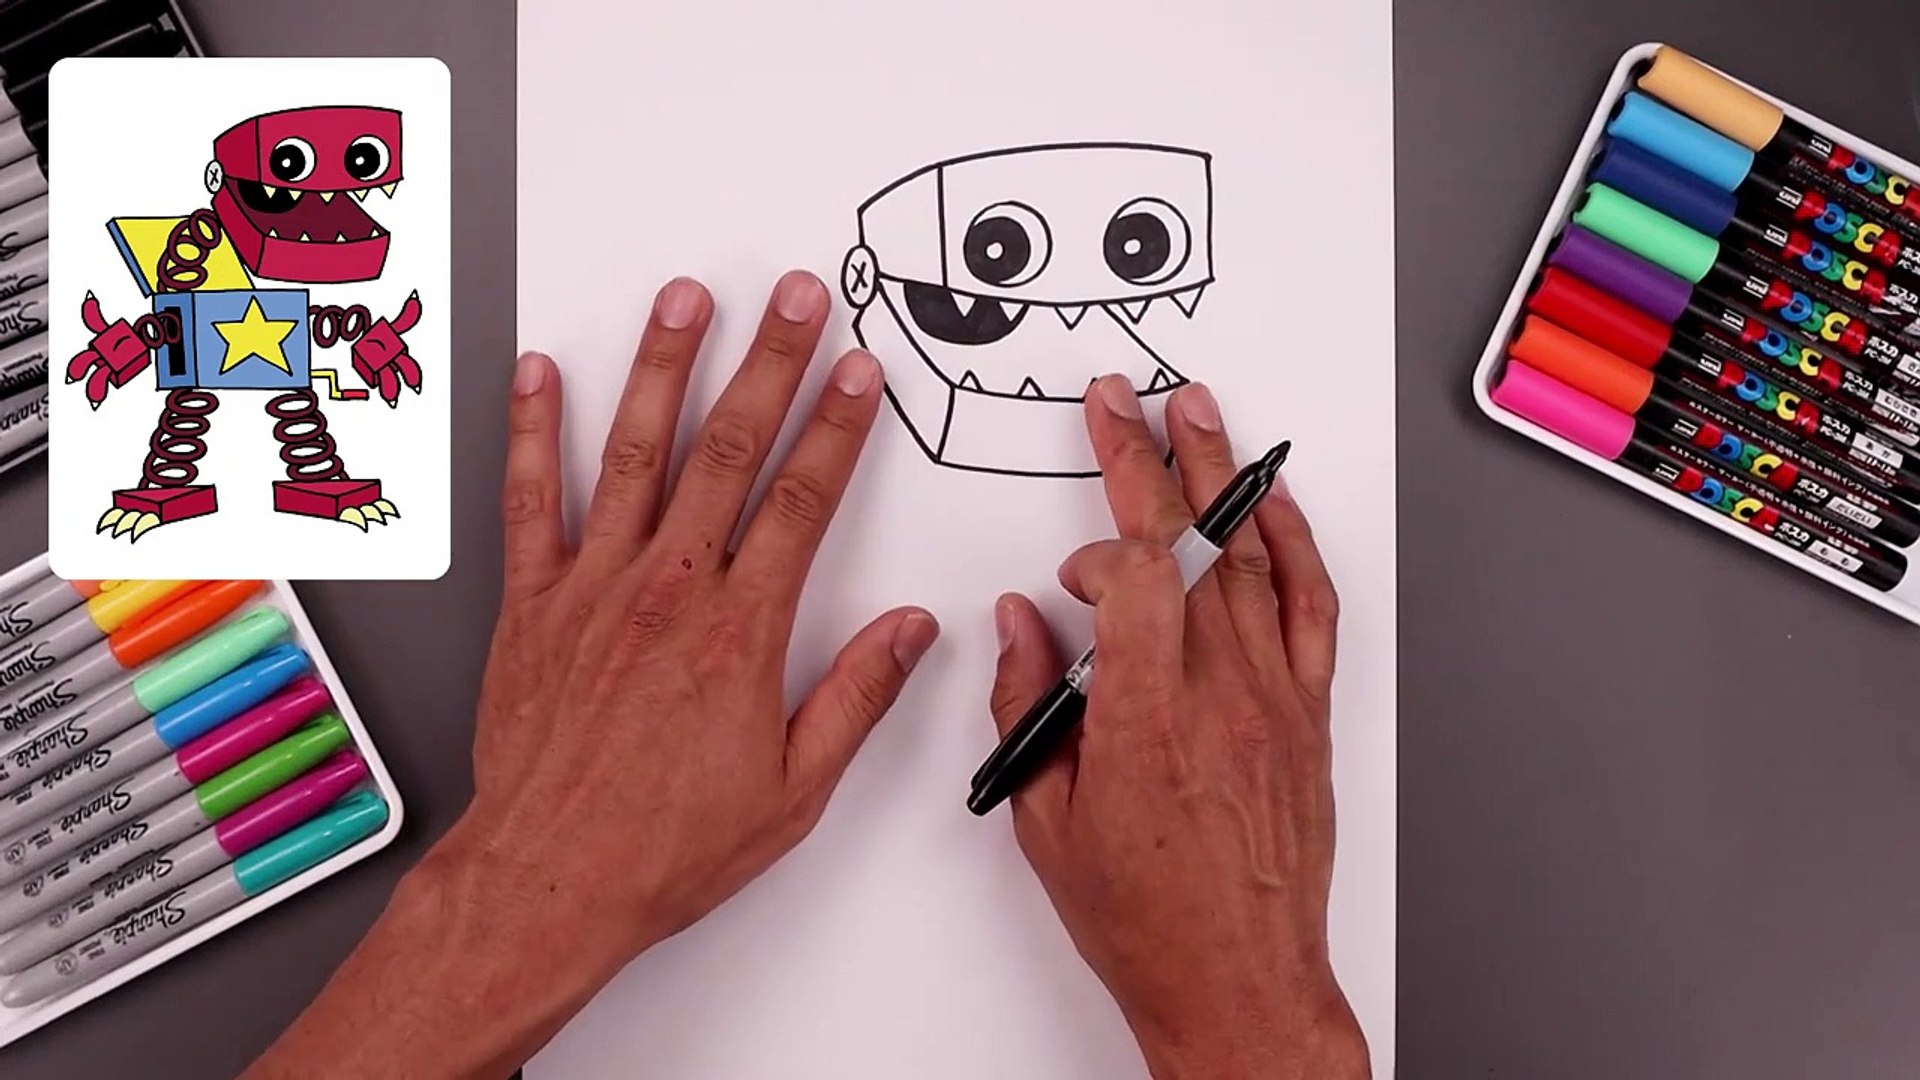 How to draw BOXY BOO - Poppy Playtime 